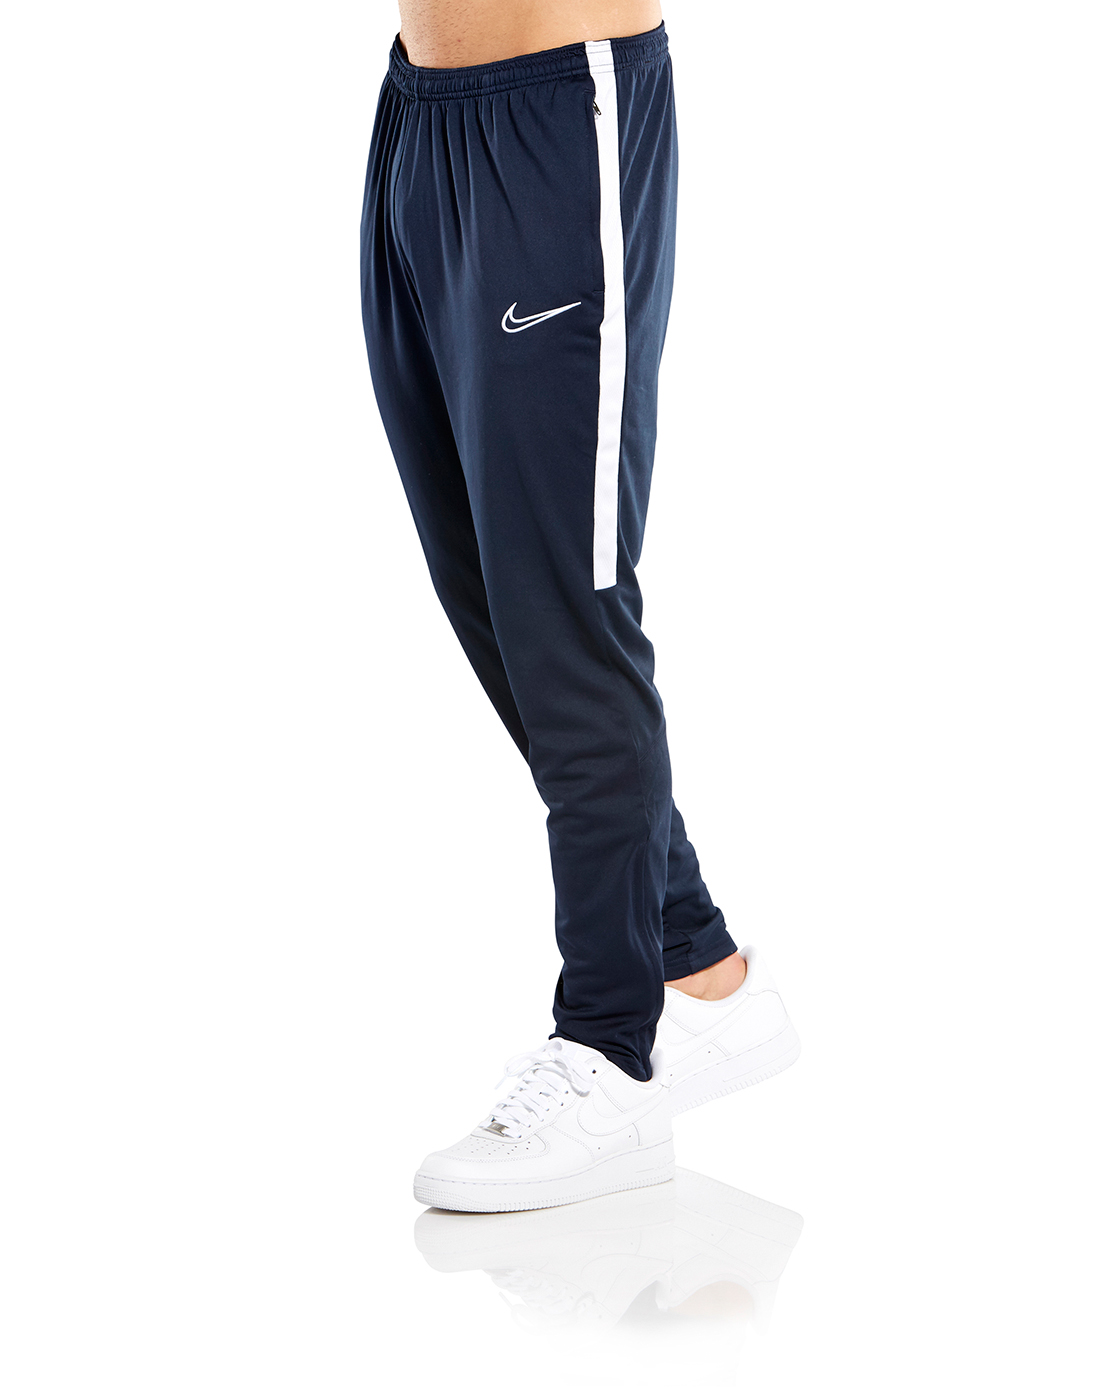 Men's Navy Nike Academy Pants | Life Style Sports